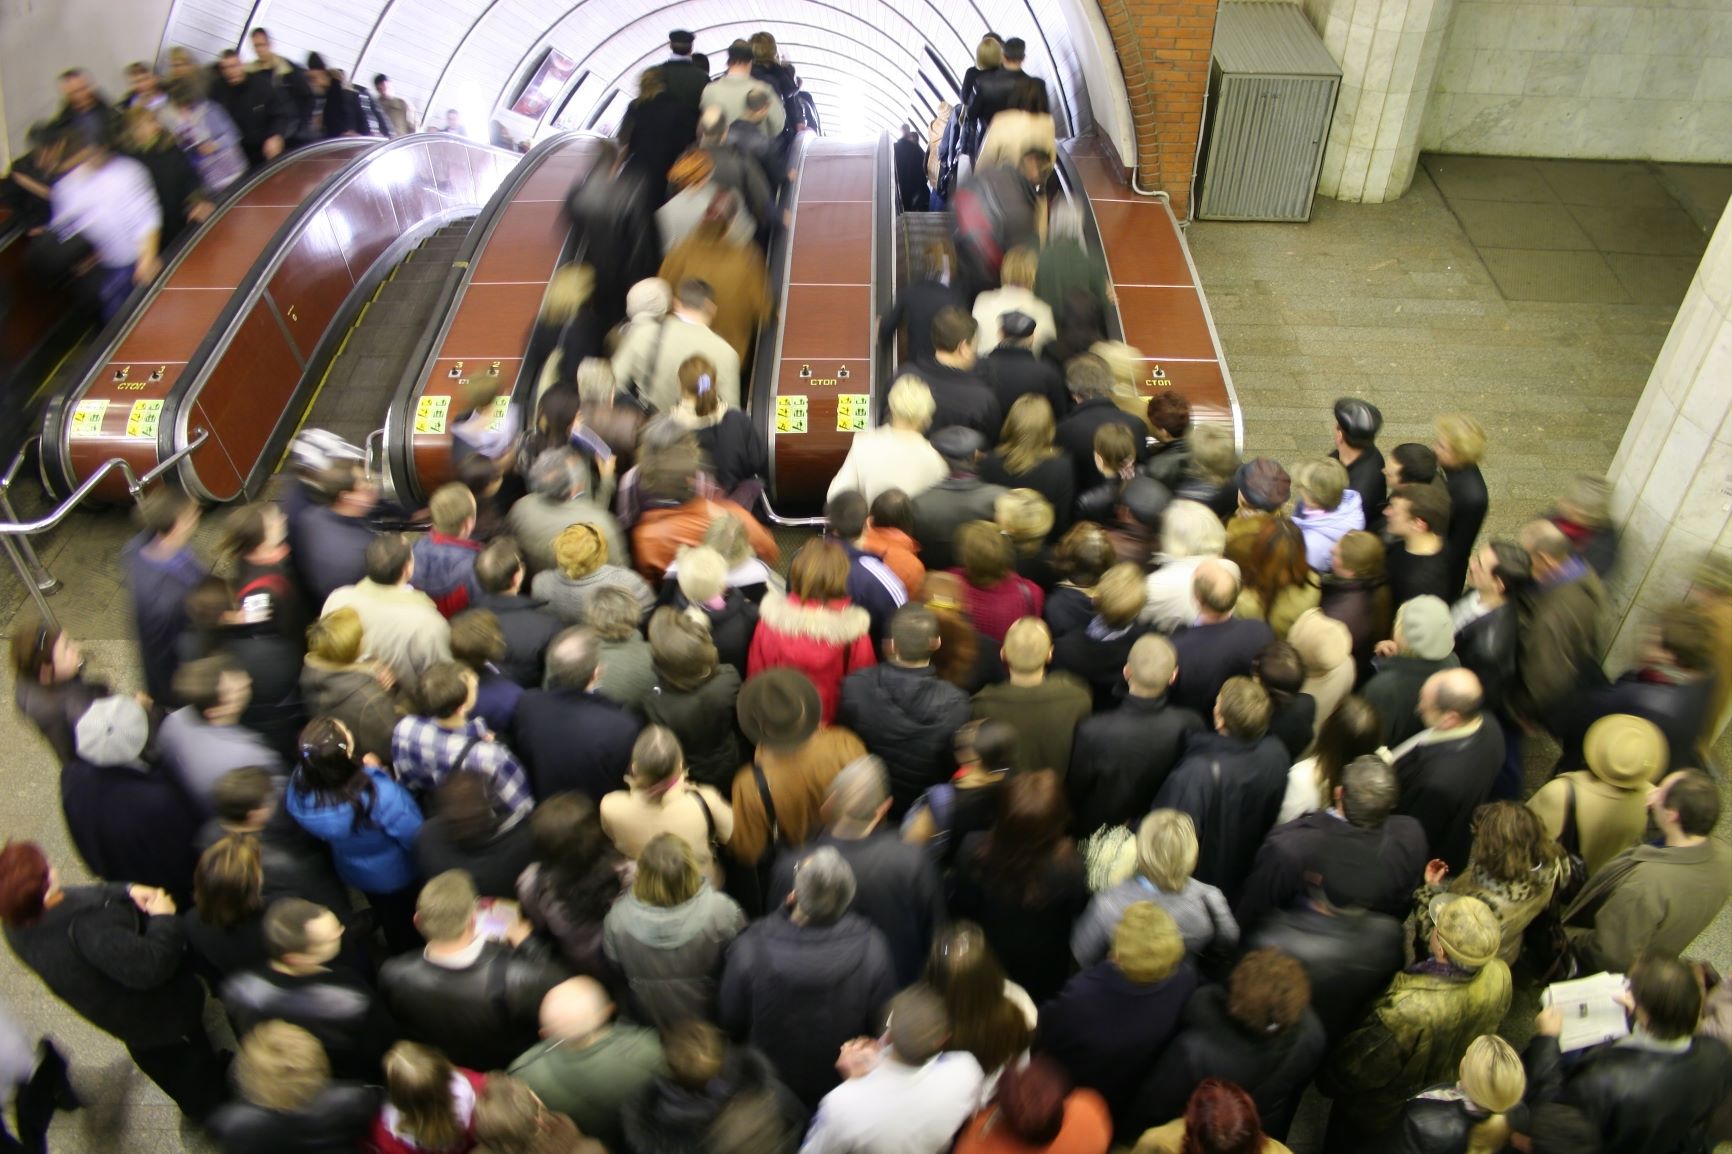 Transport - crowds on escalator